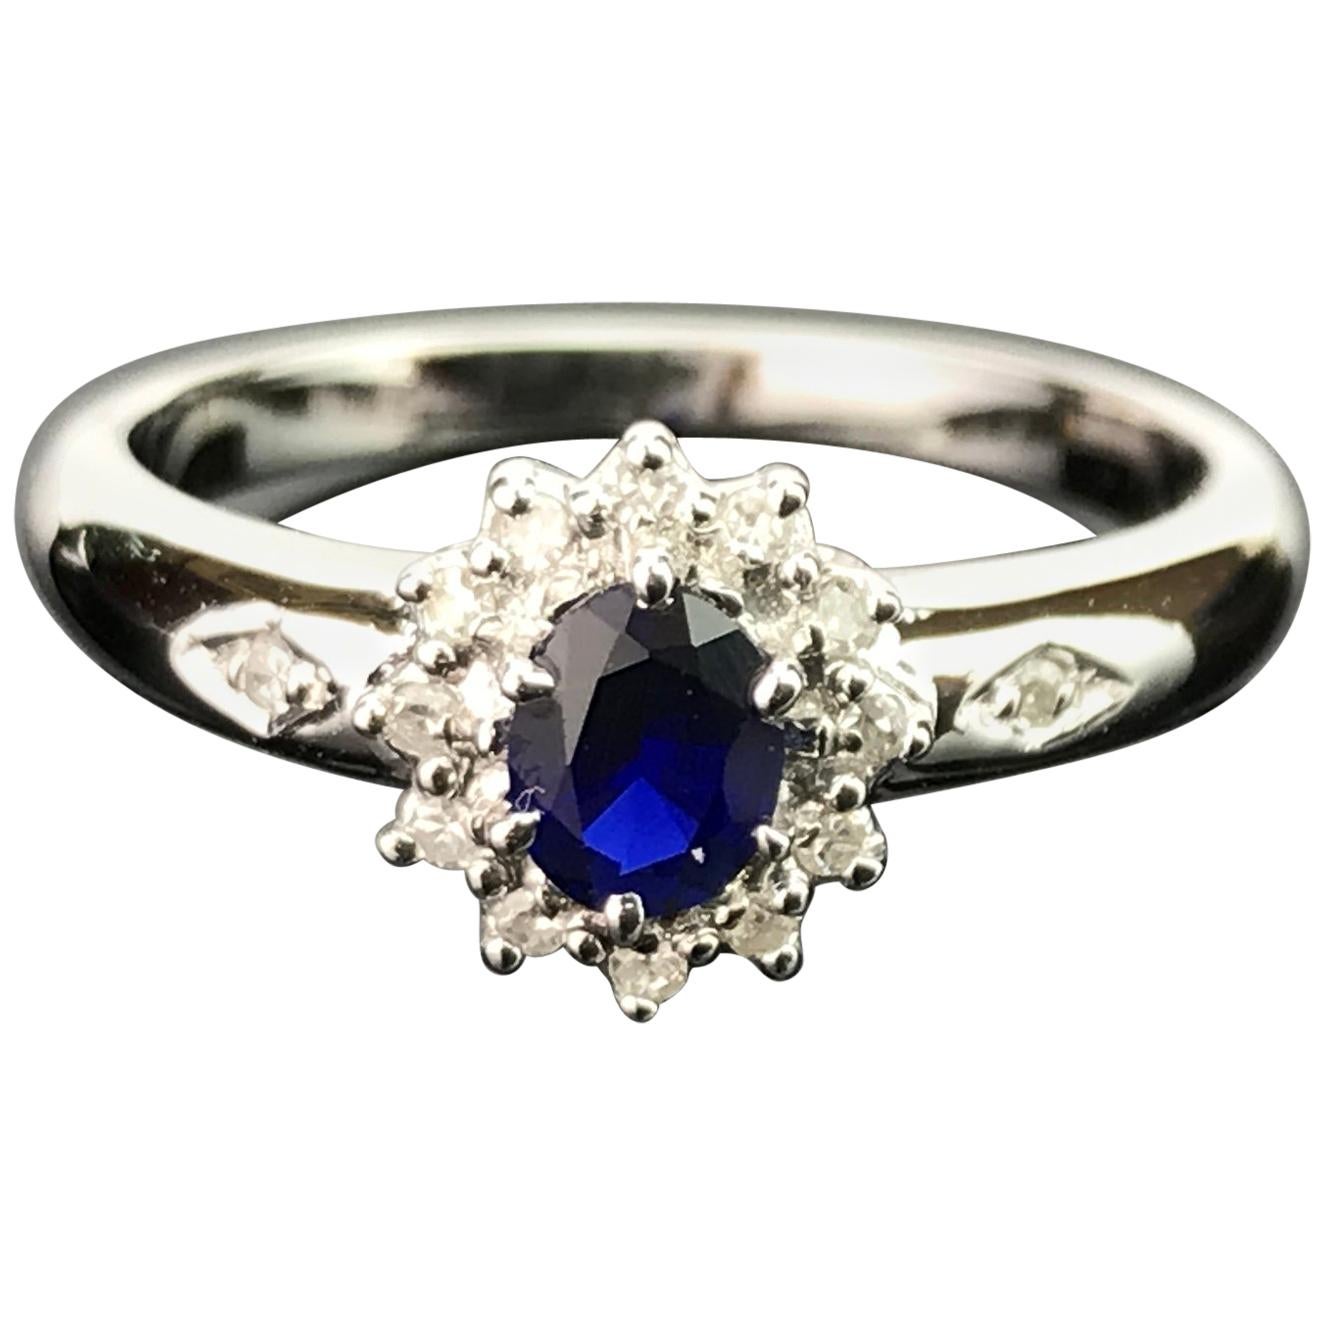 Blue Sapphire and Diamond 14 Karat Gold Ring